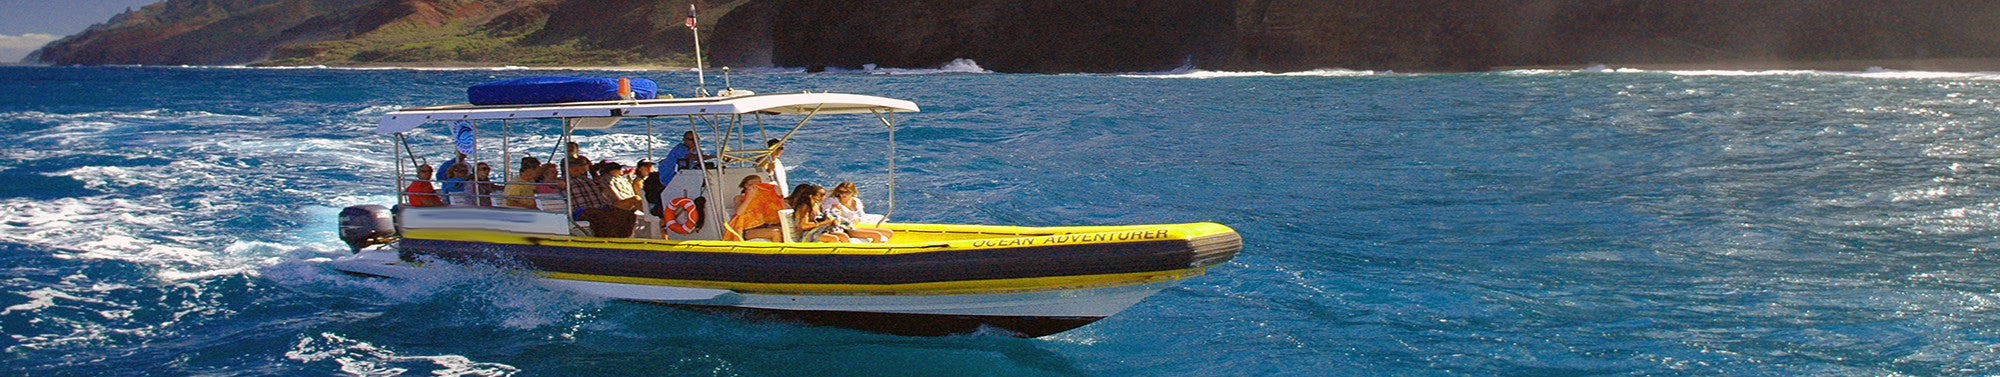 Hawaii Rafting catamaran sailing